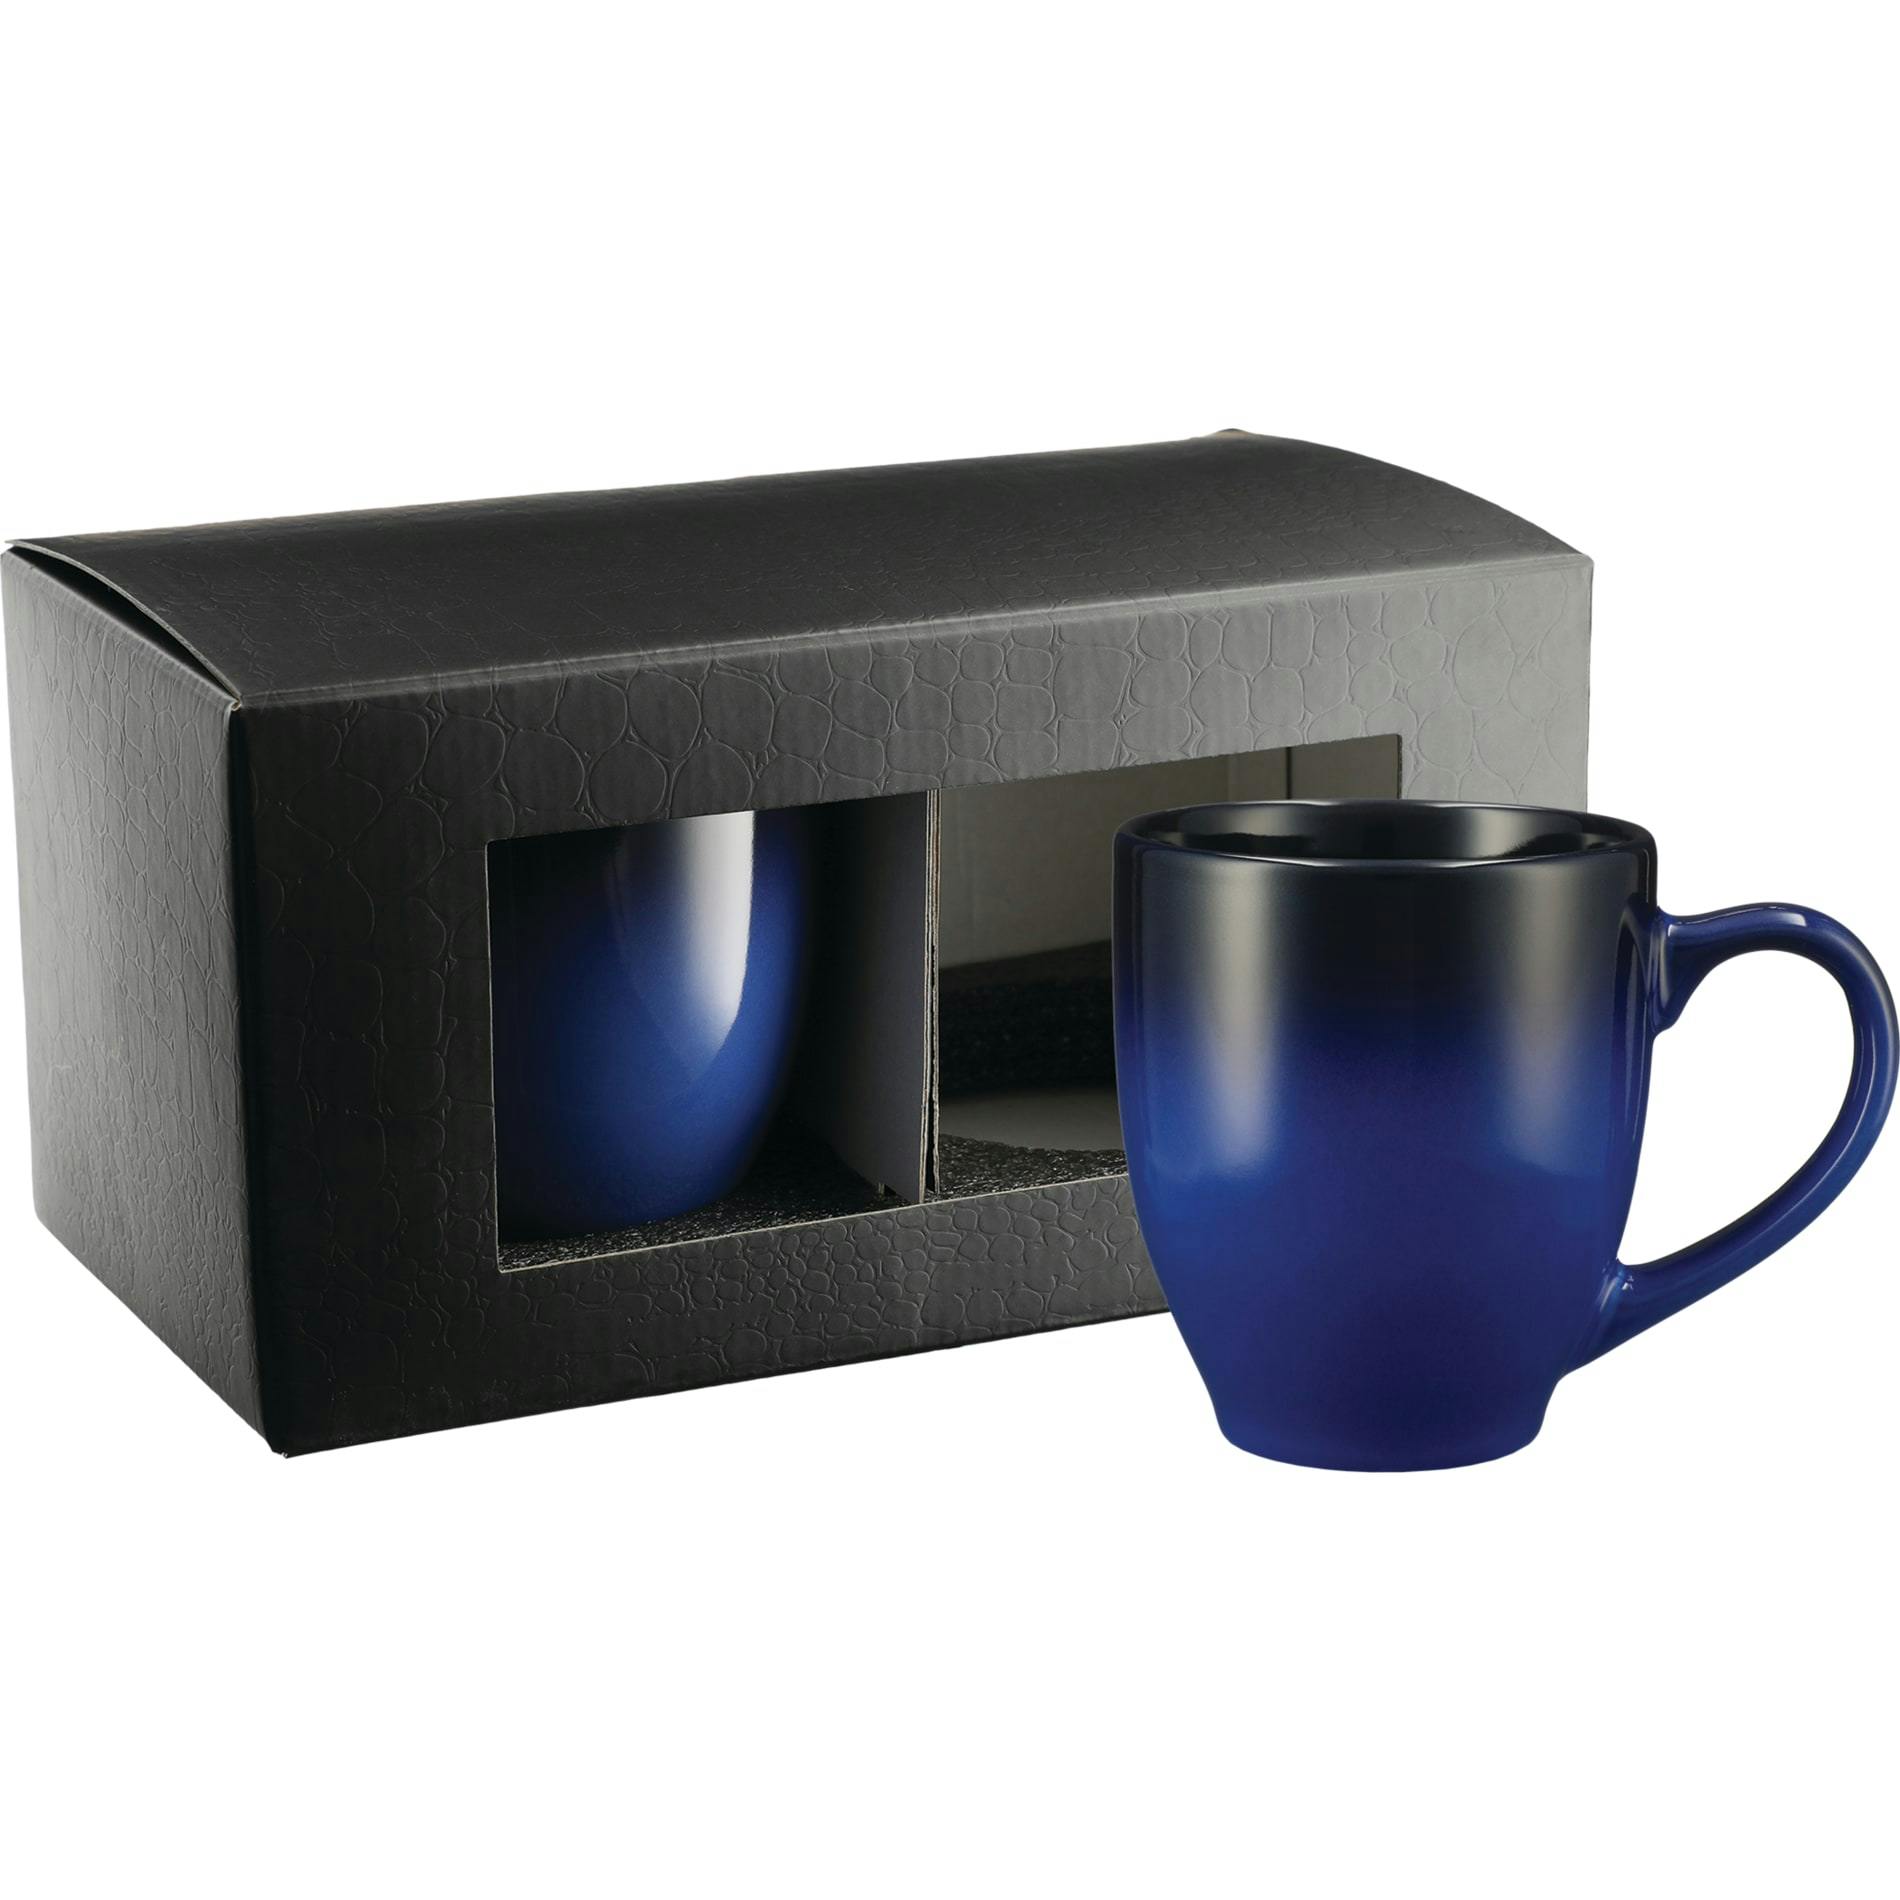 Bistro Ceramic Mug 2 in 1 Gift Set - additional Image 3